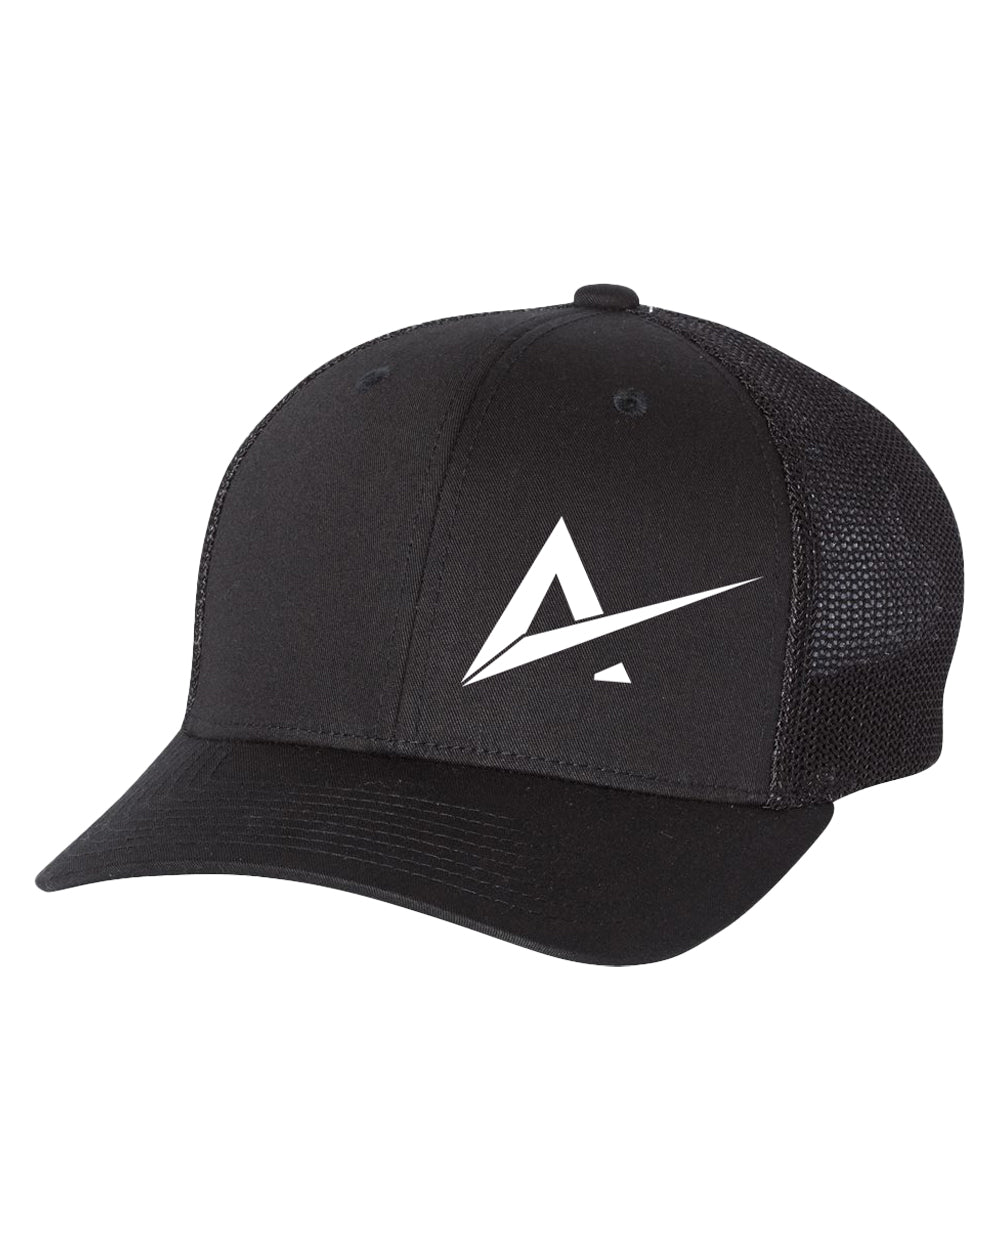 Hat, Black Mesh Back Flexfit - AdrenalineApparel